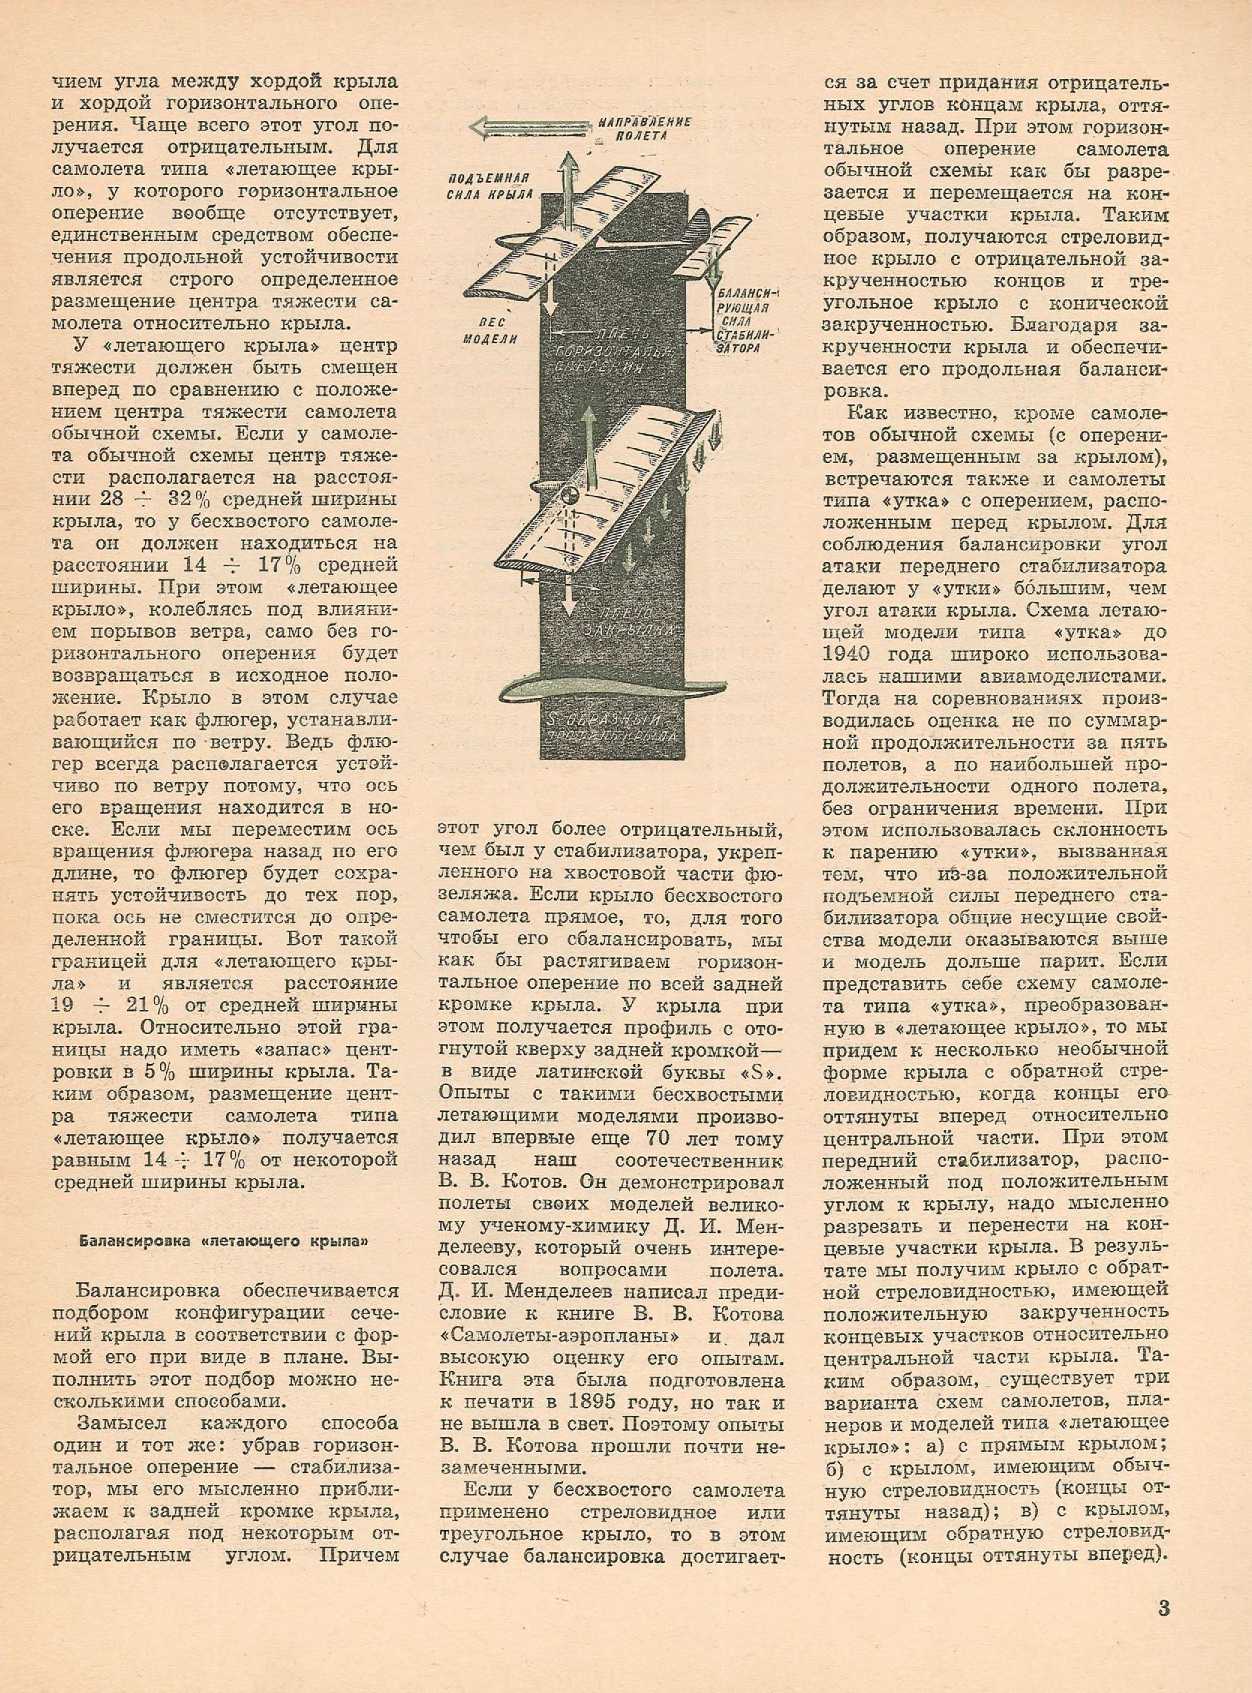 ЮМК 10, 1964, 3 c.